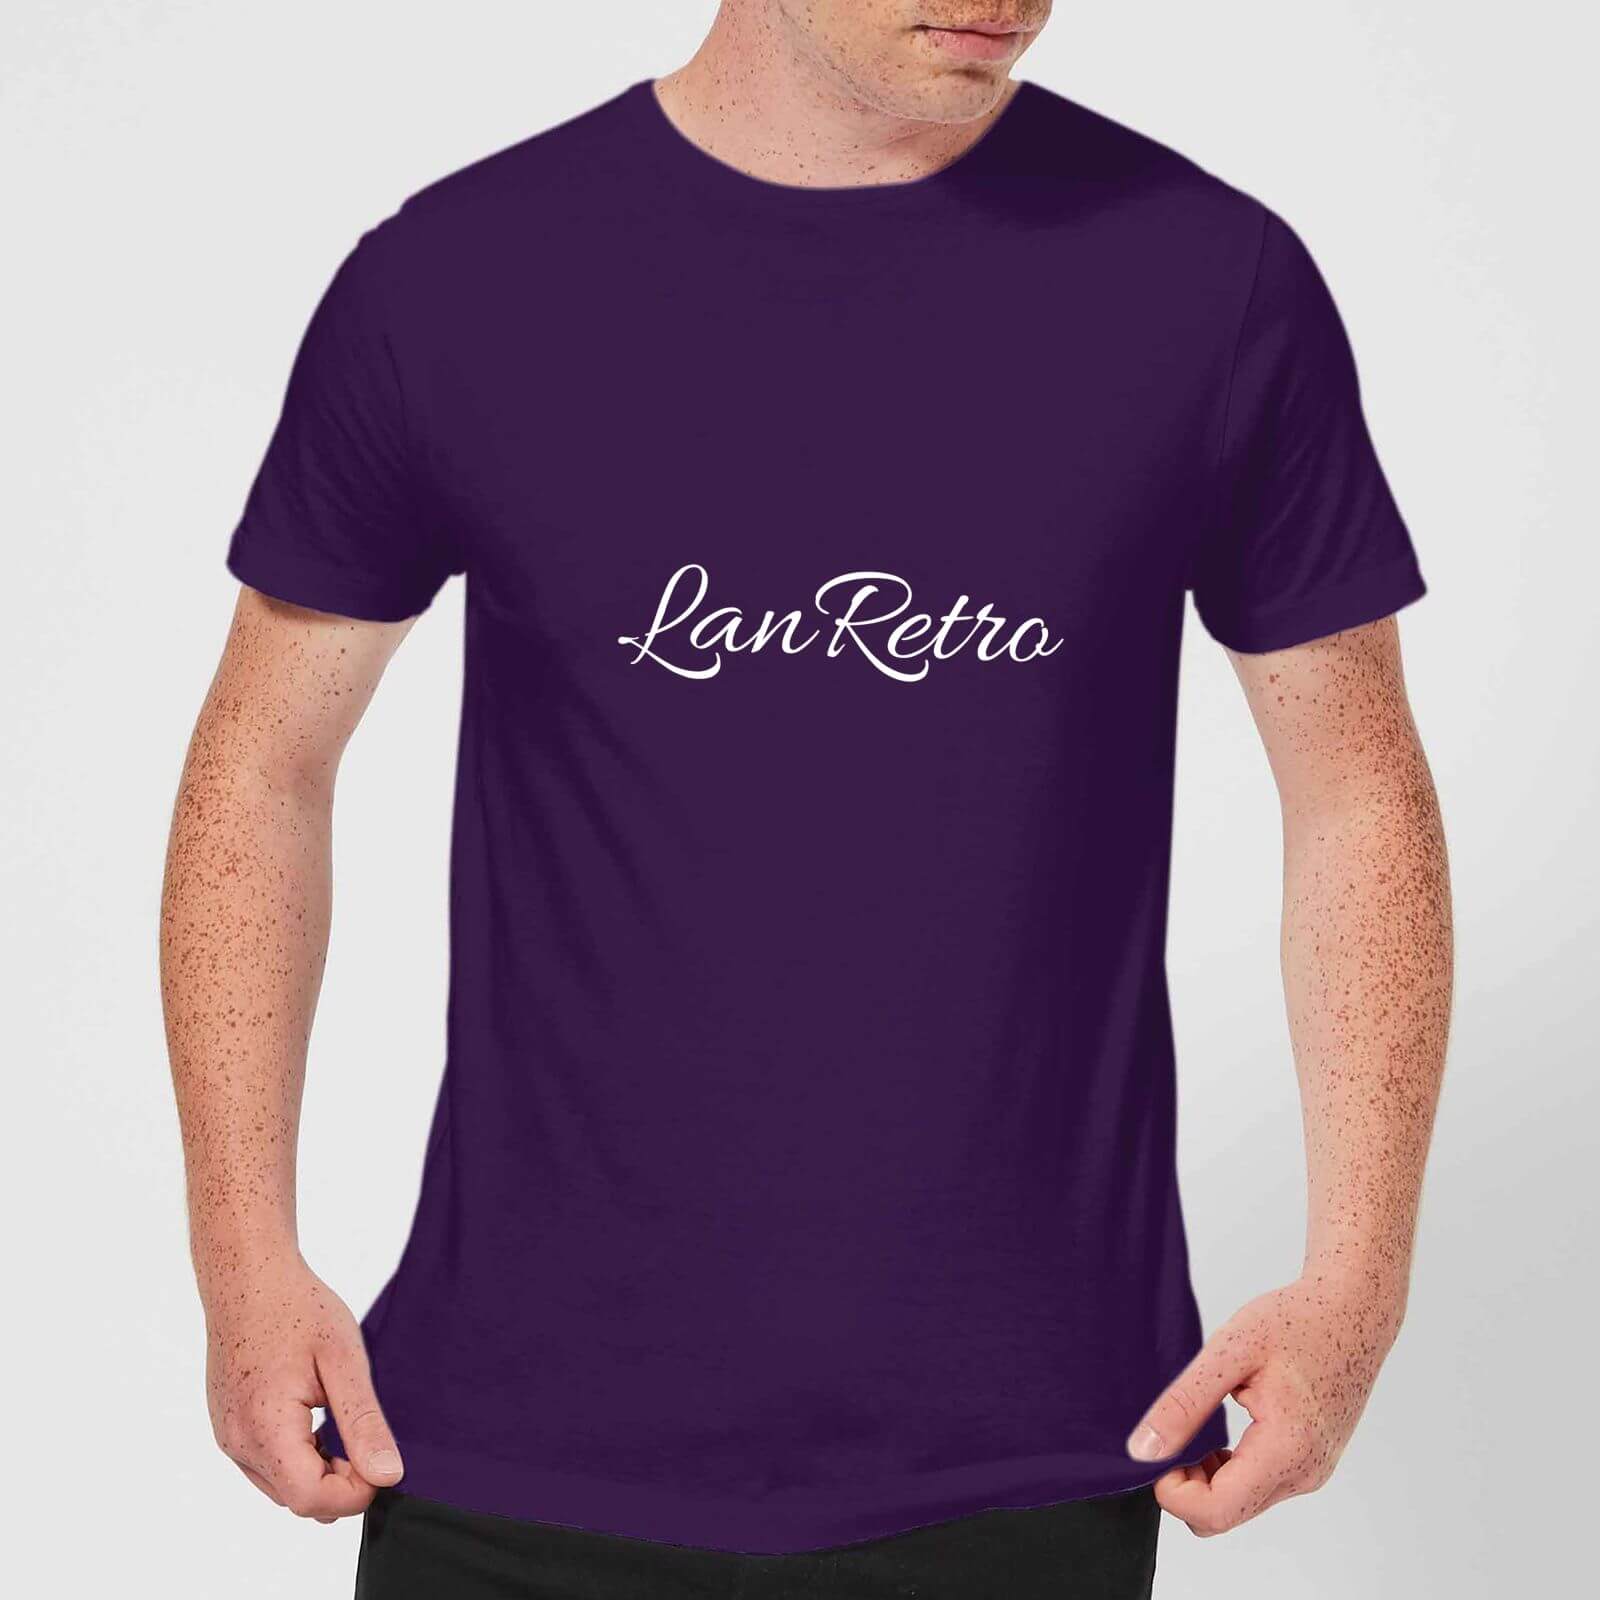 Lanre Retro Lanretro Men's T-Shirt - Purple - L - Purple